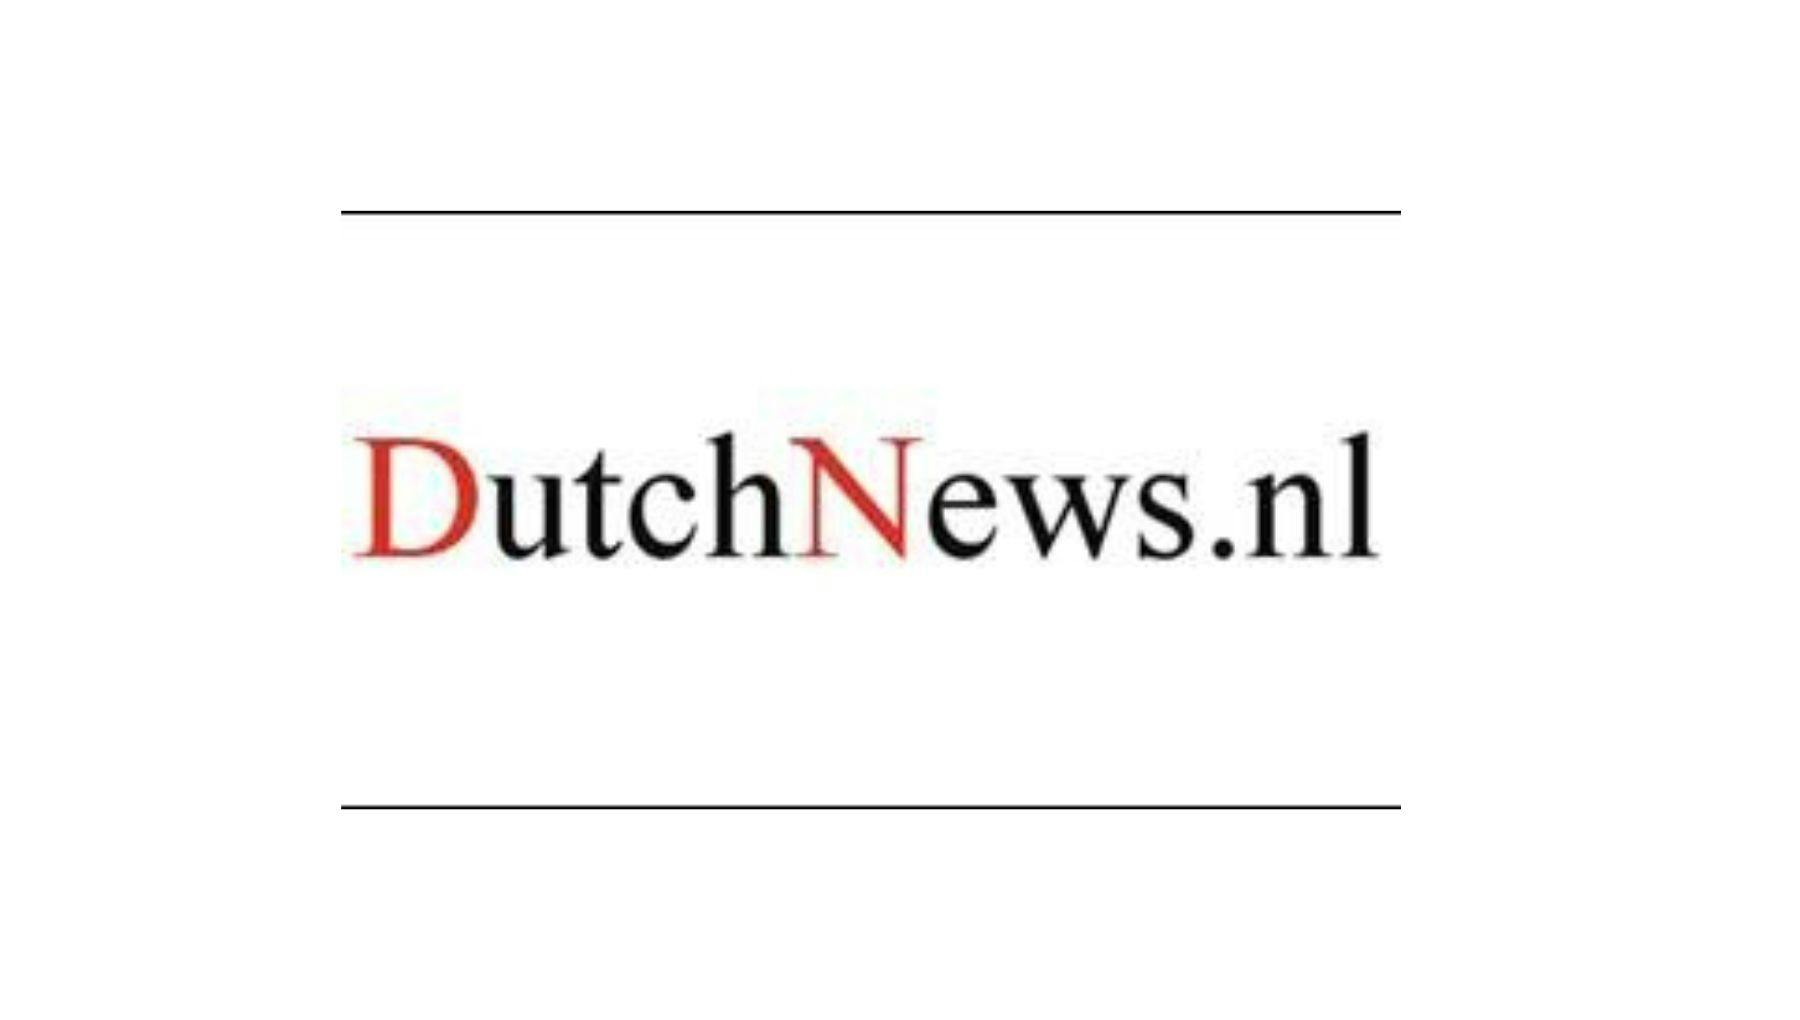 DutchNews.nl